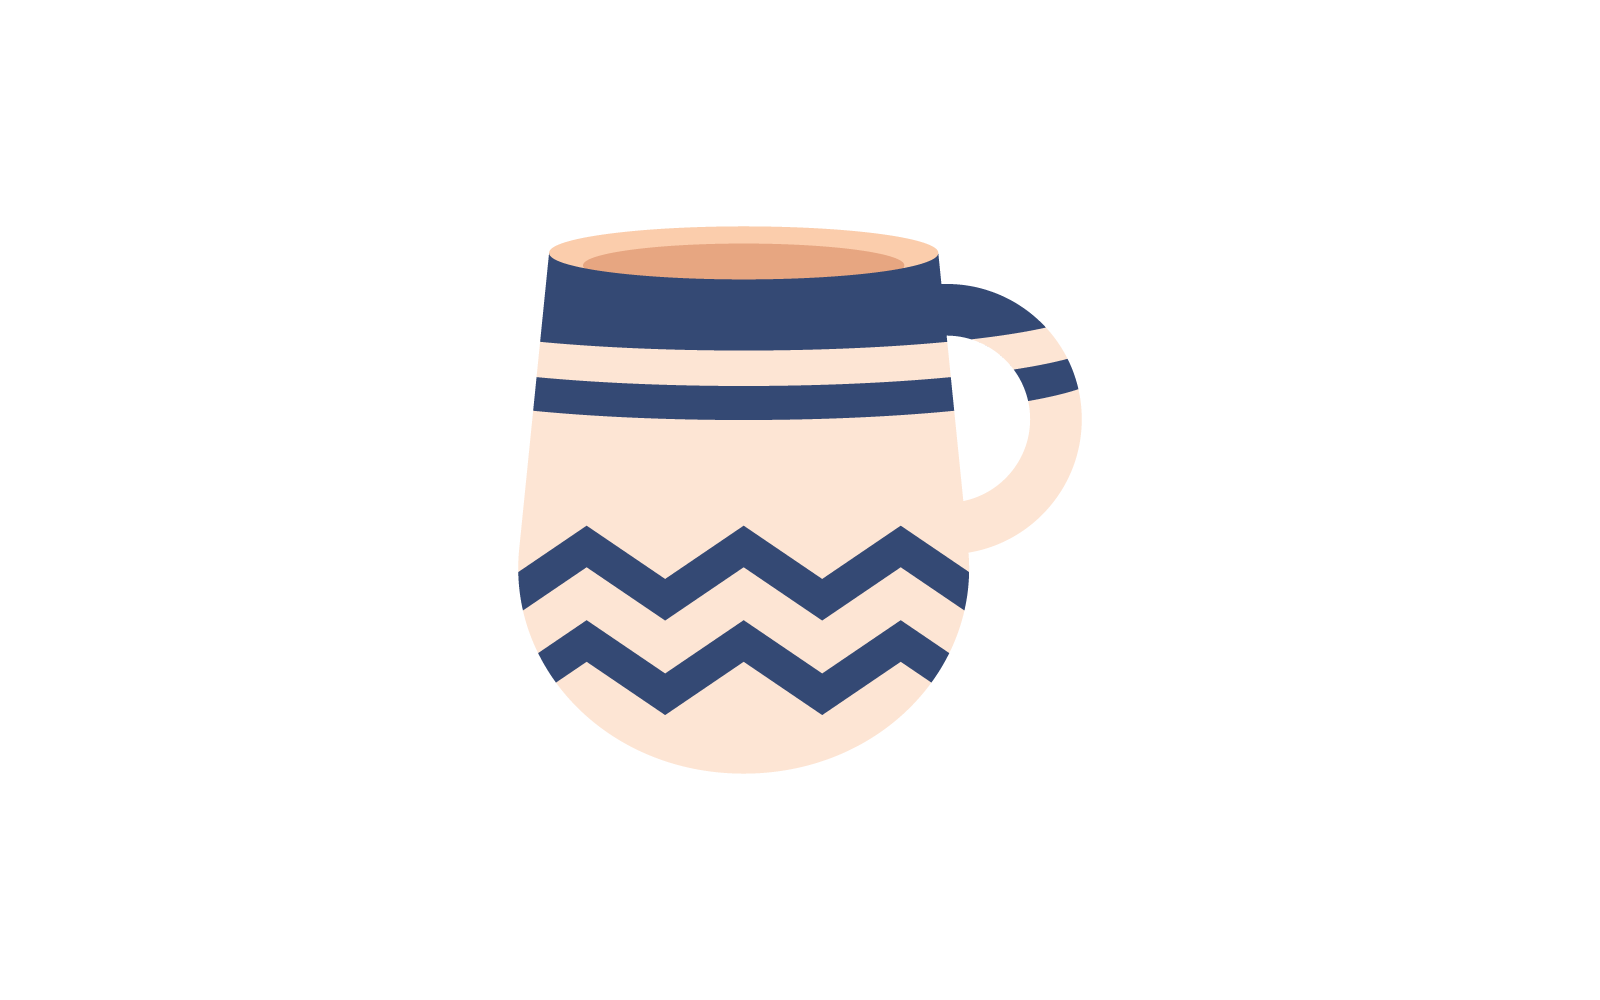 Tea or coffe cup vector illustration icon